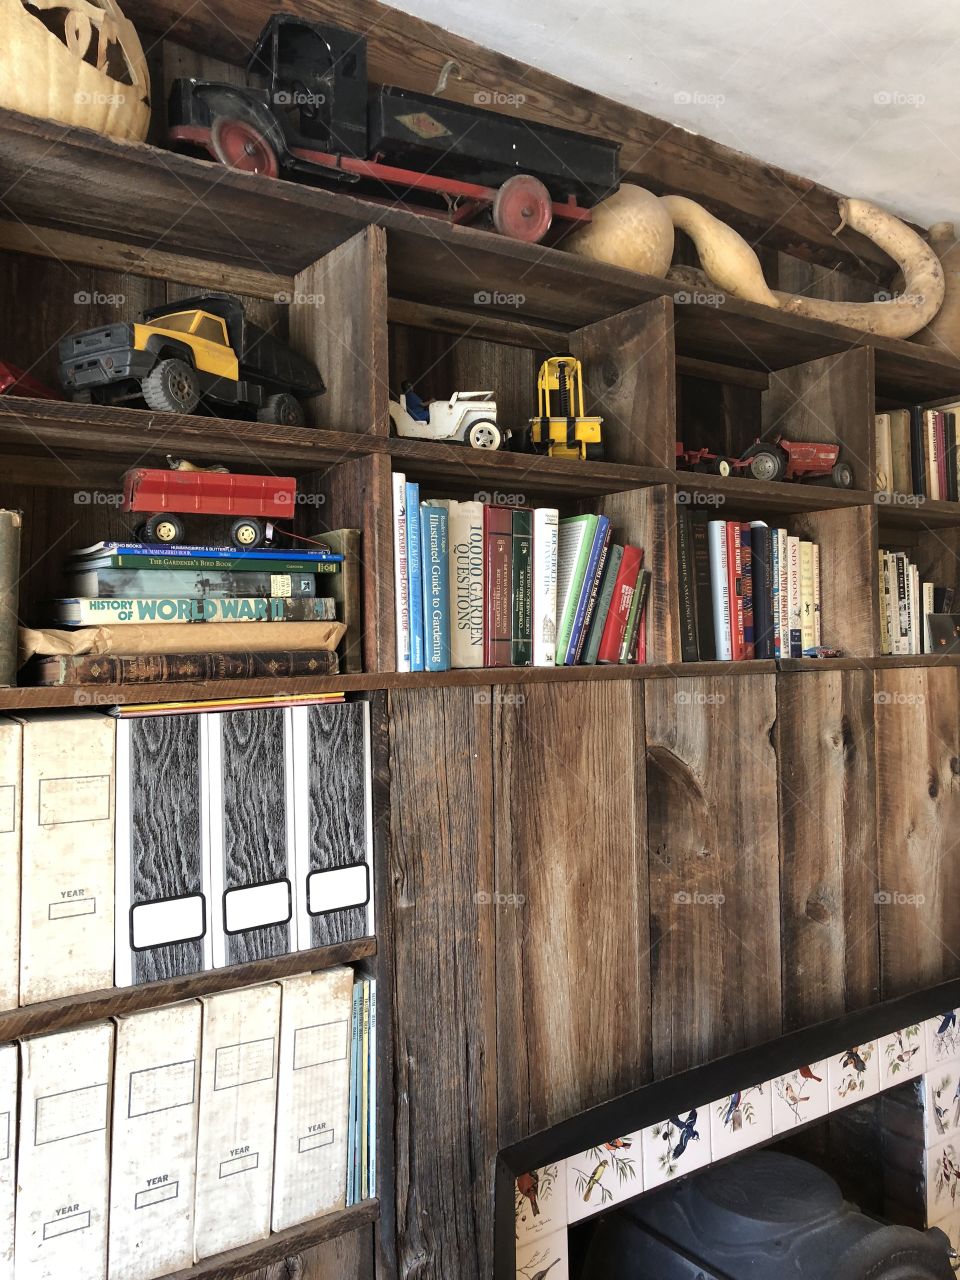 Barn board bookshelves with childhood memories